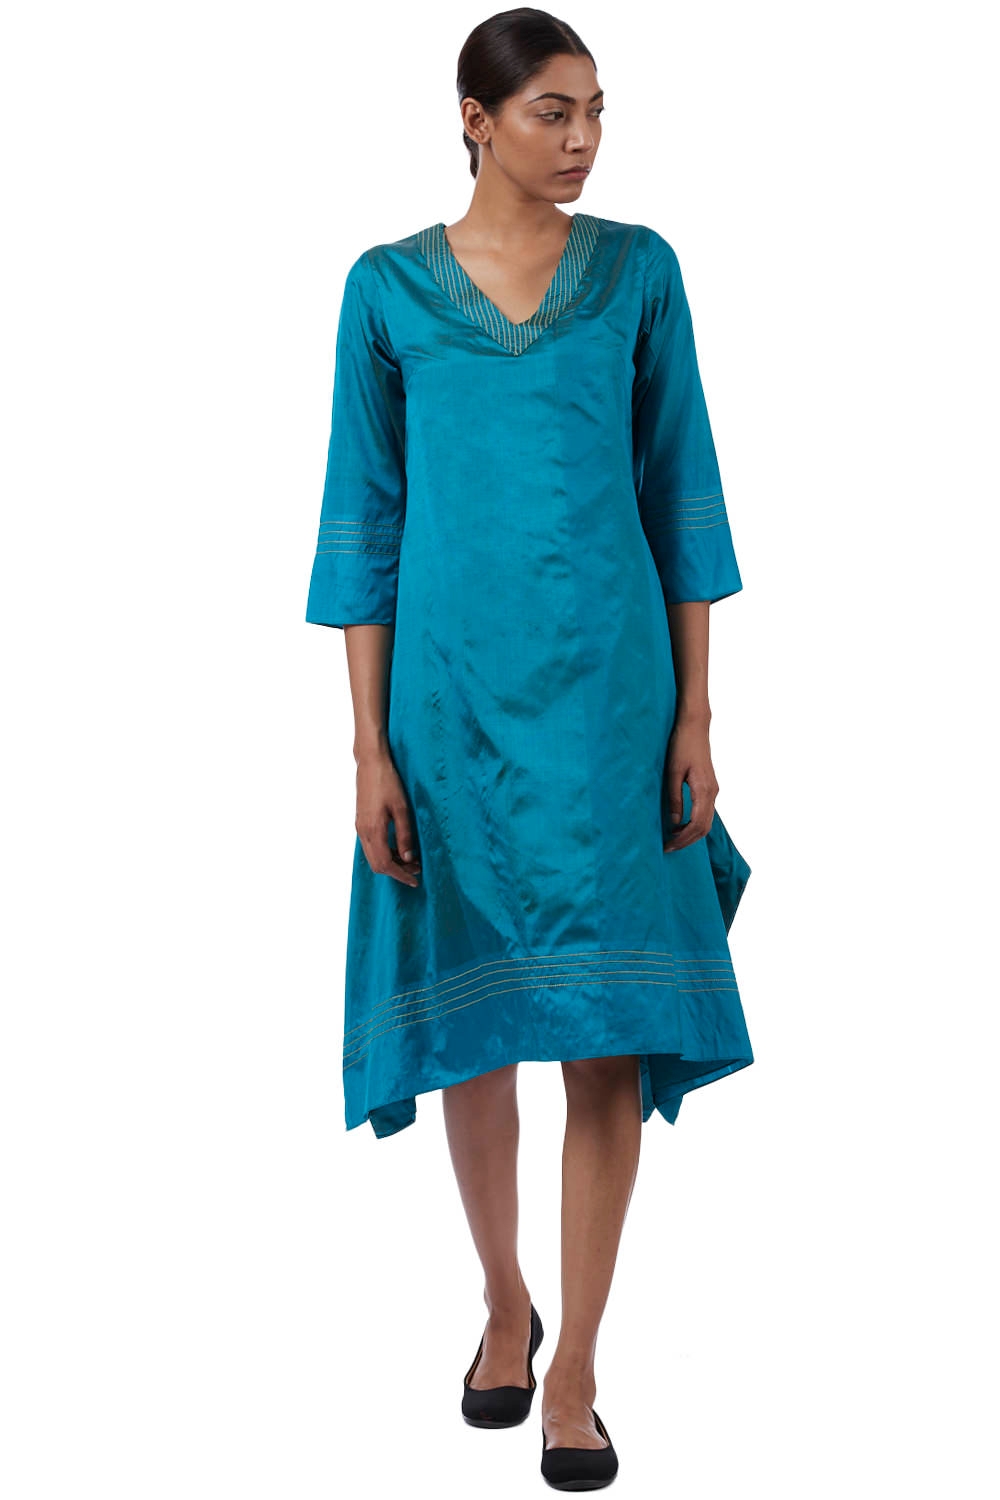 ABRAHAM AND THAKORE | Handwoven Pure Silk Kite Dress